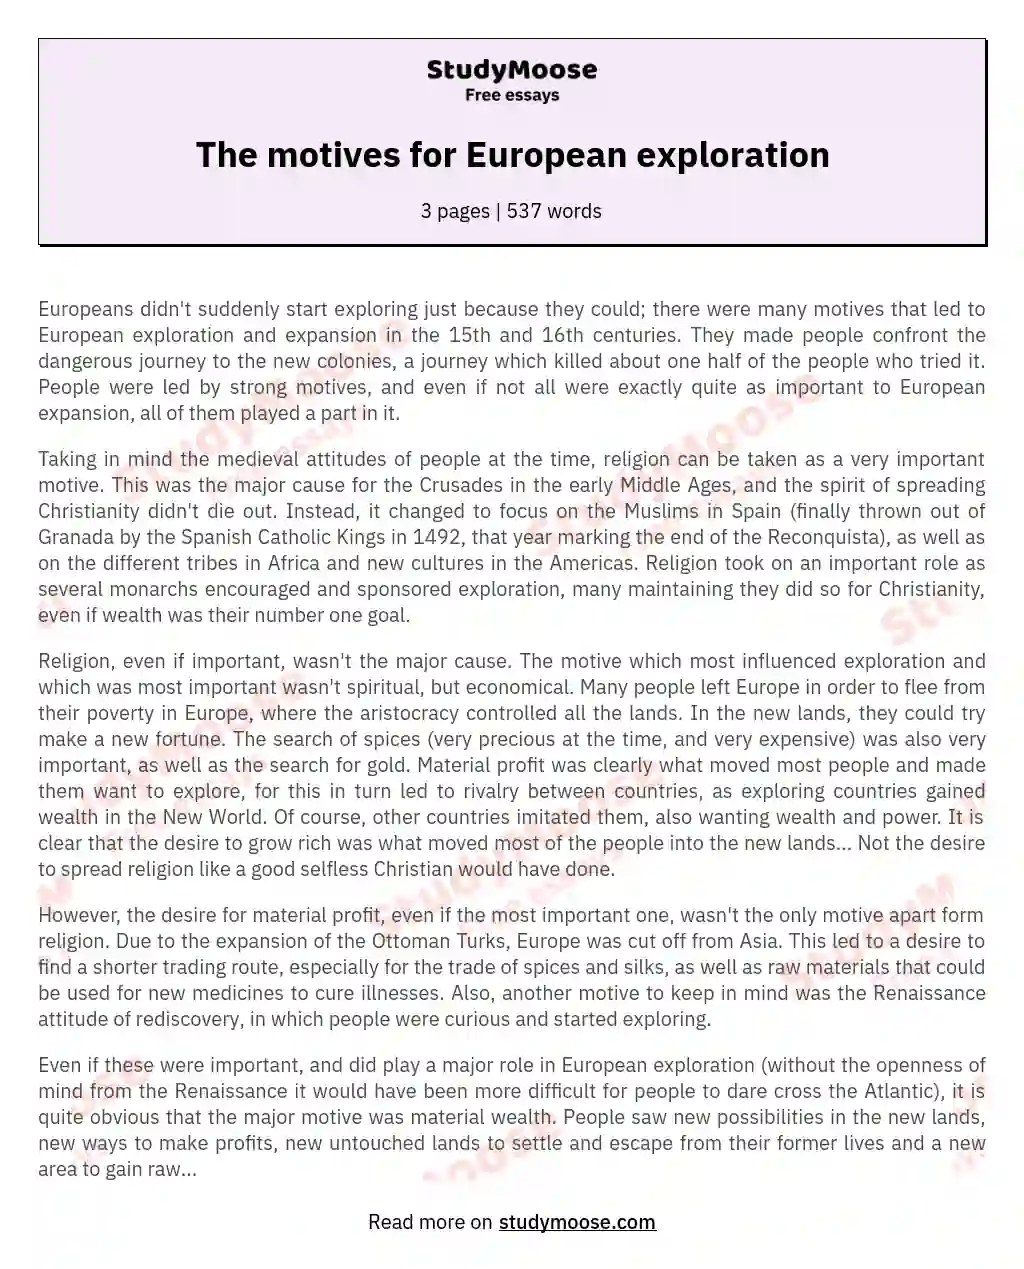 The motives for European exploration essay